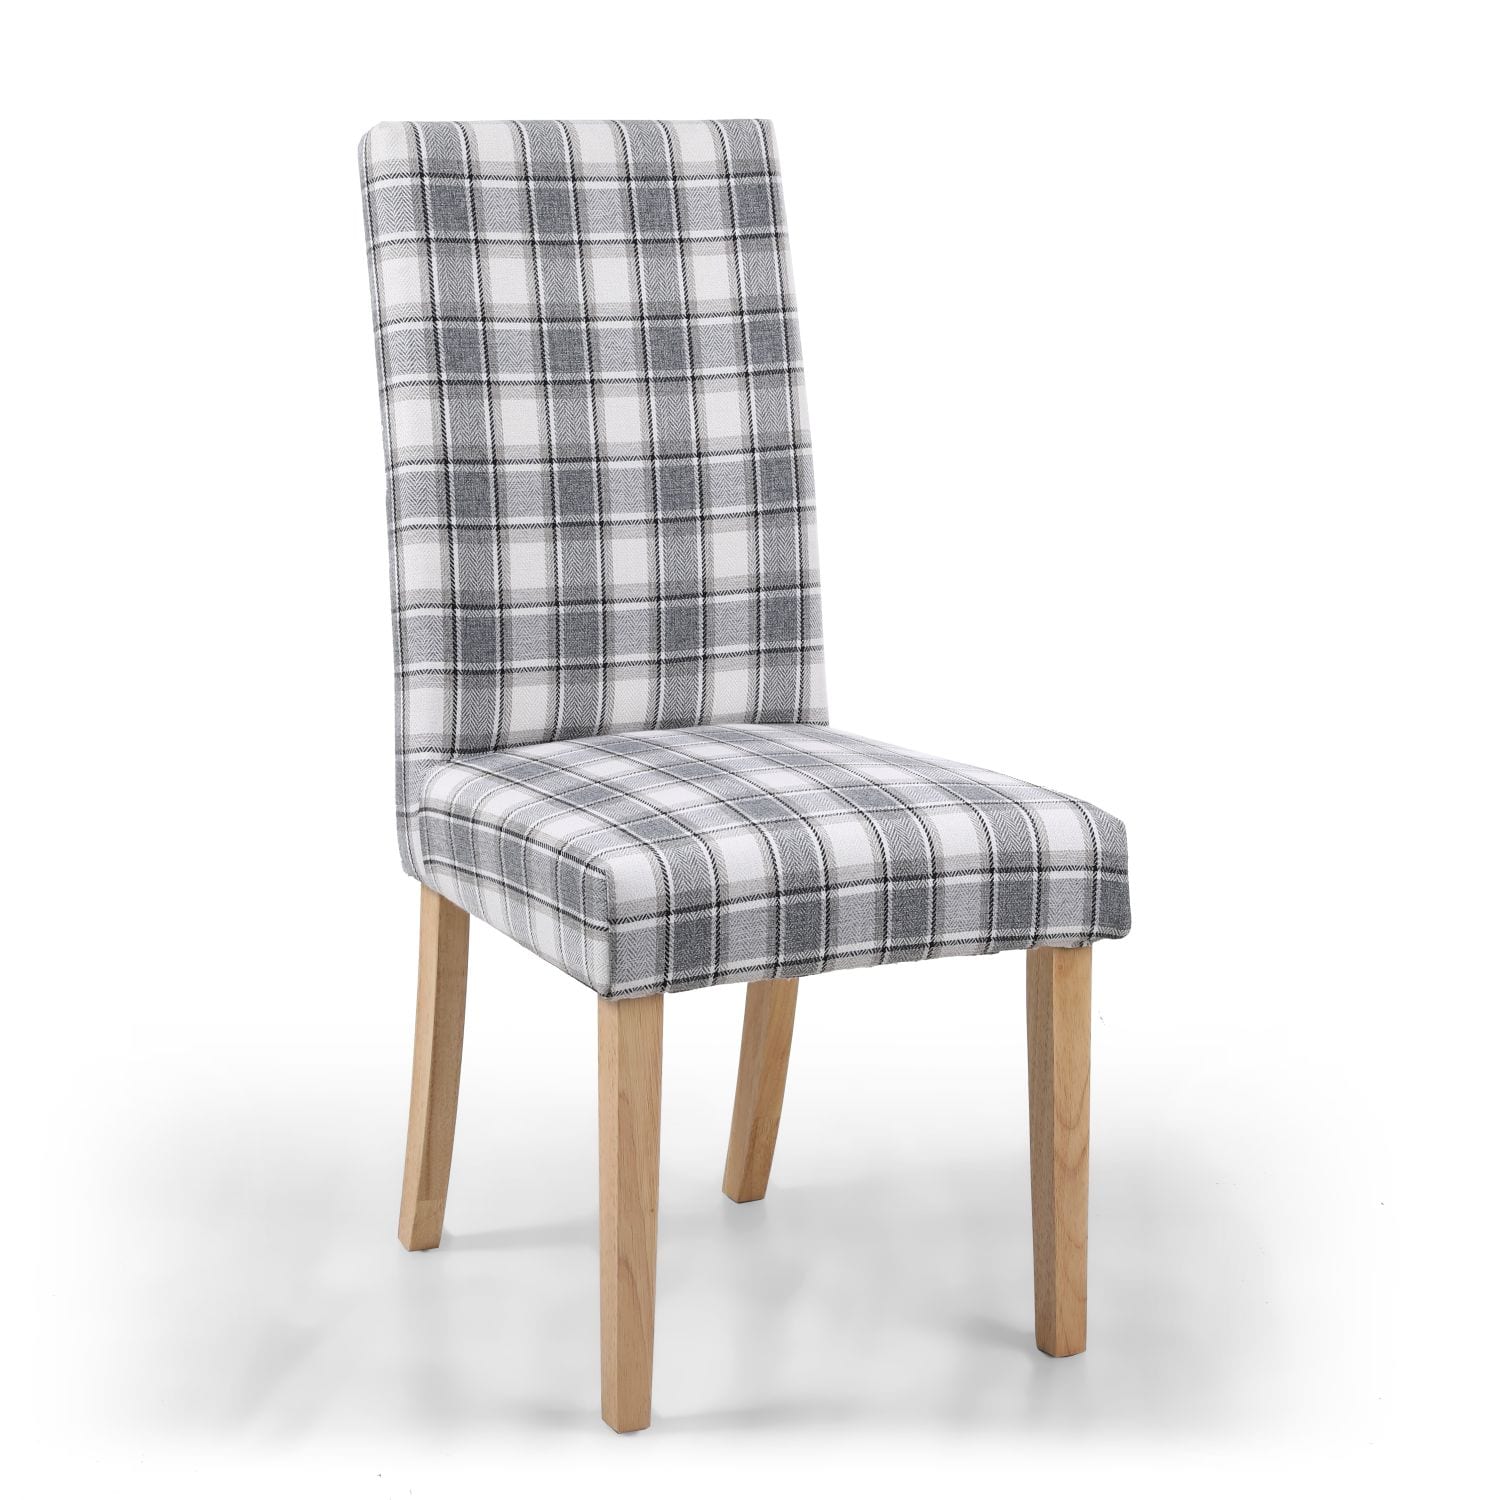 Medley Herringbone Check Cappuccino Chair In Legs